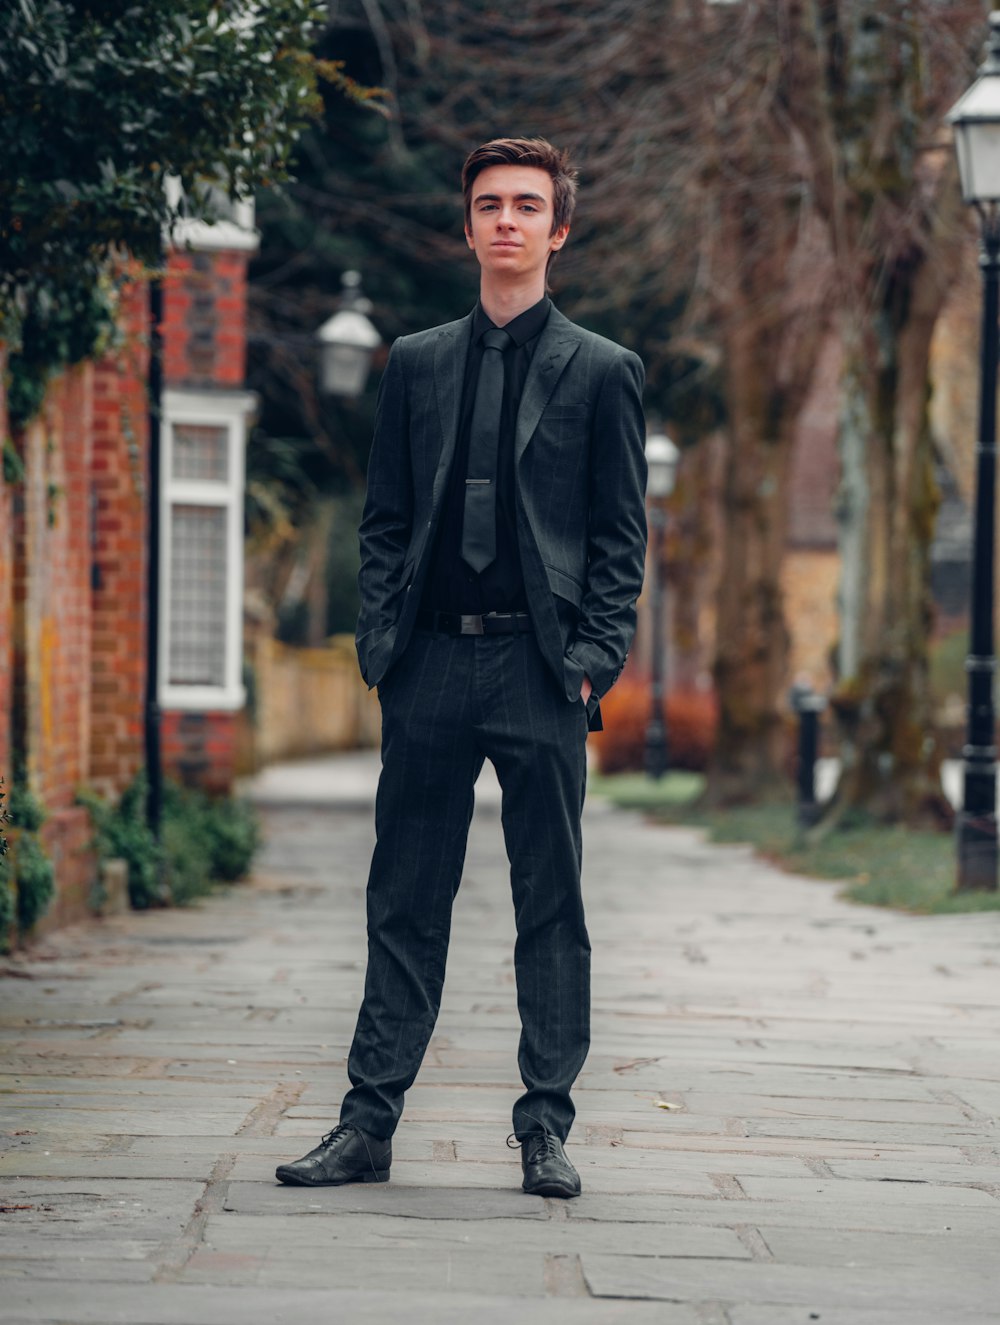 Man in black suit jacket and brown pants standing on sidewalk during  daytime photo – Free Suit Image on Unsplash